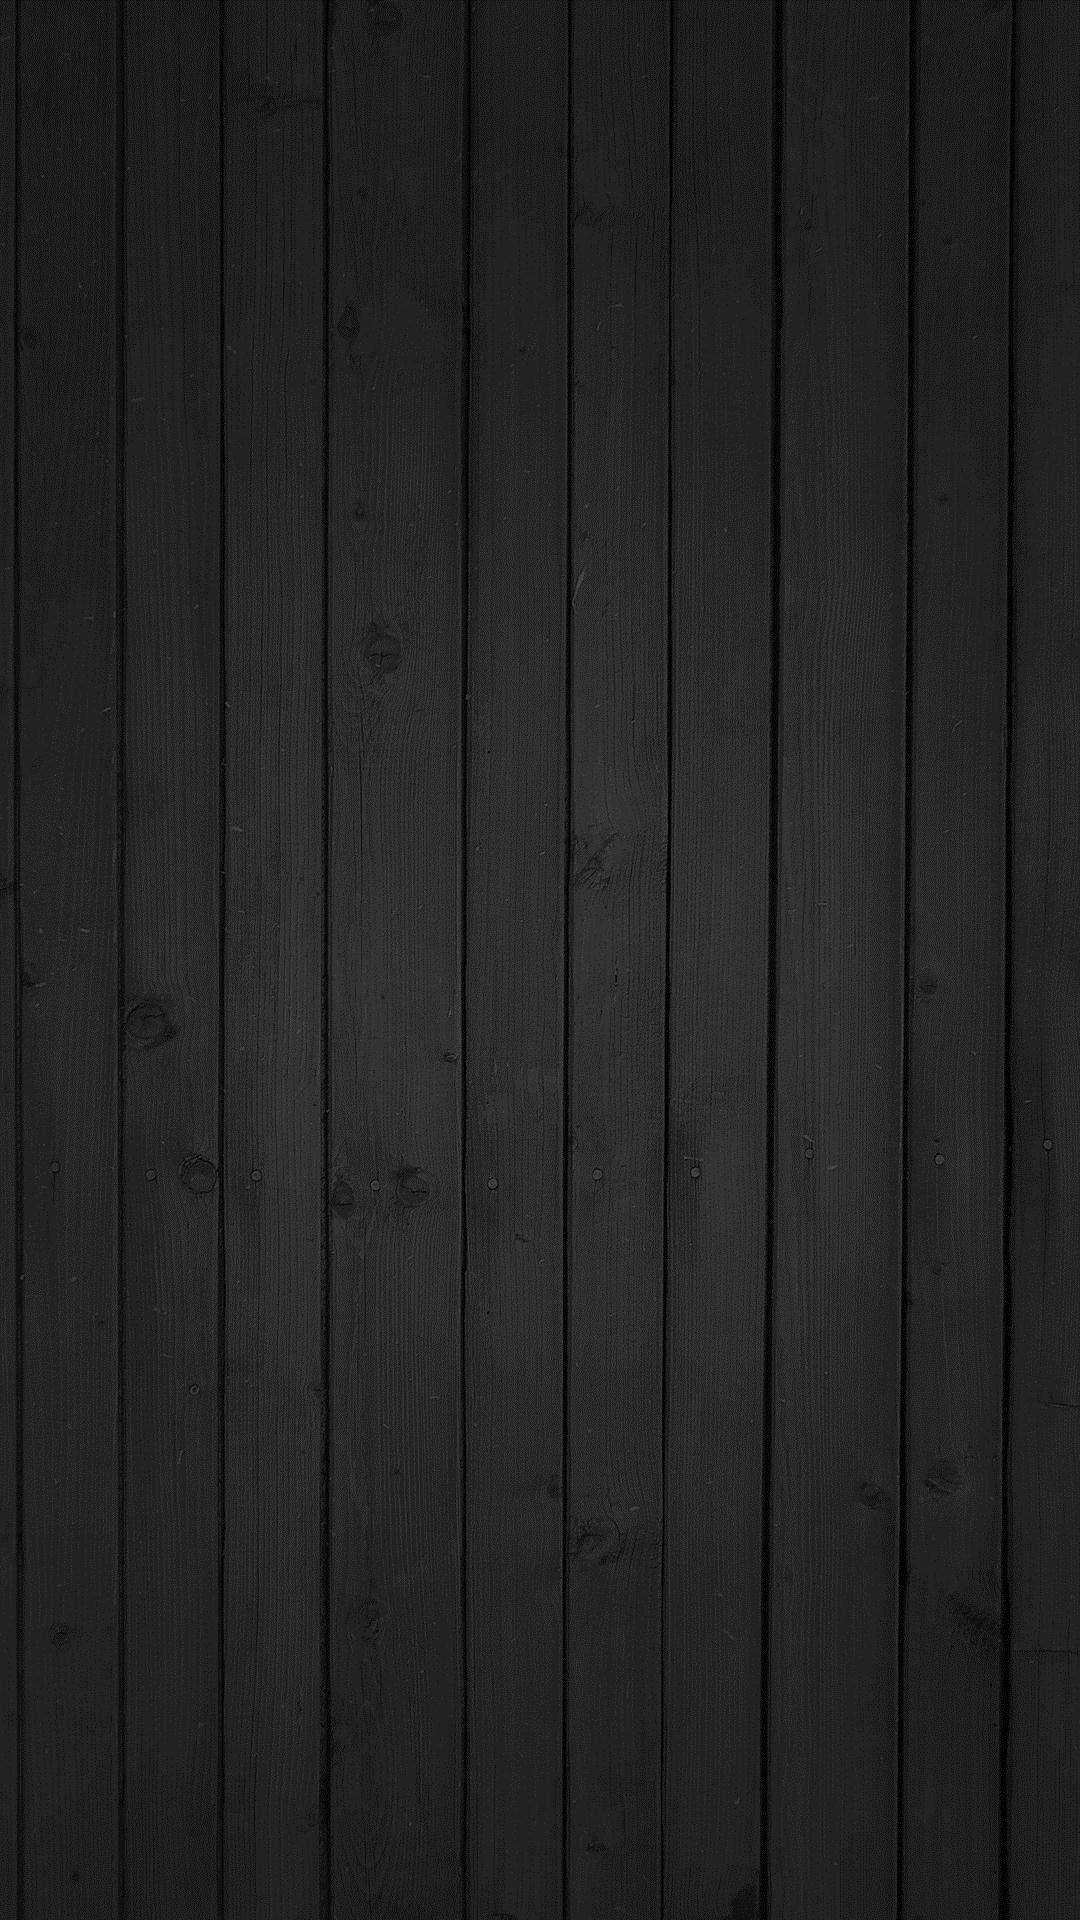 3233813 Black Wood Background Images Stock Photos  Vectors   Shutterstock